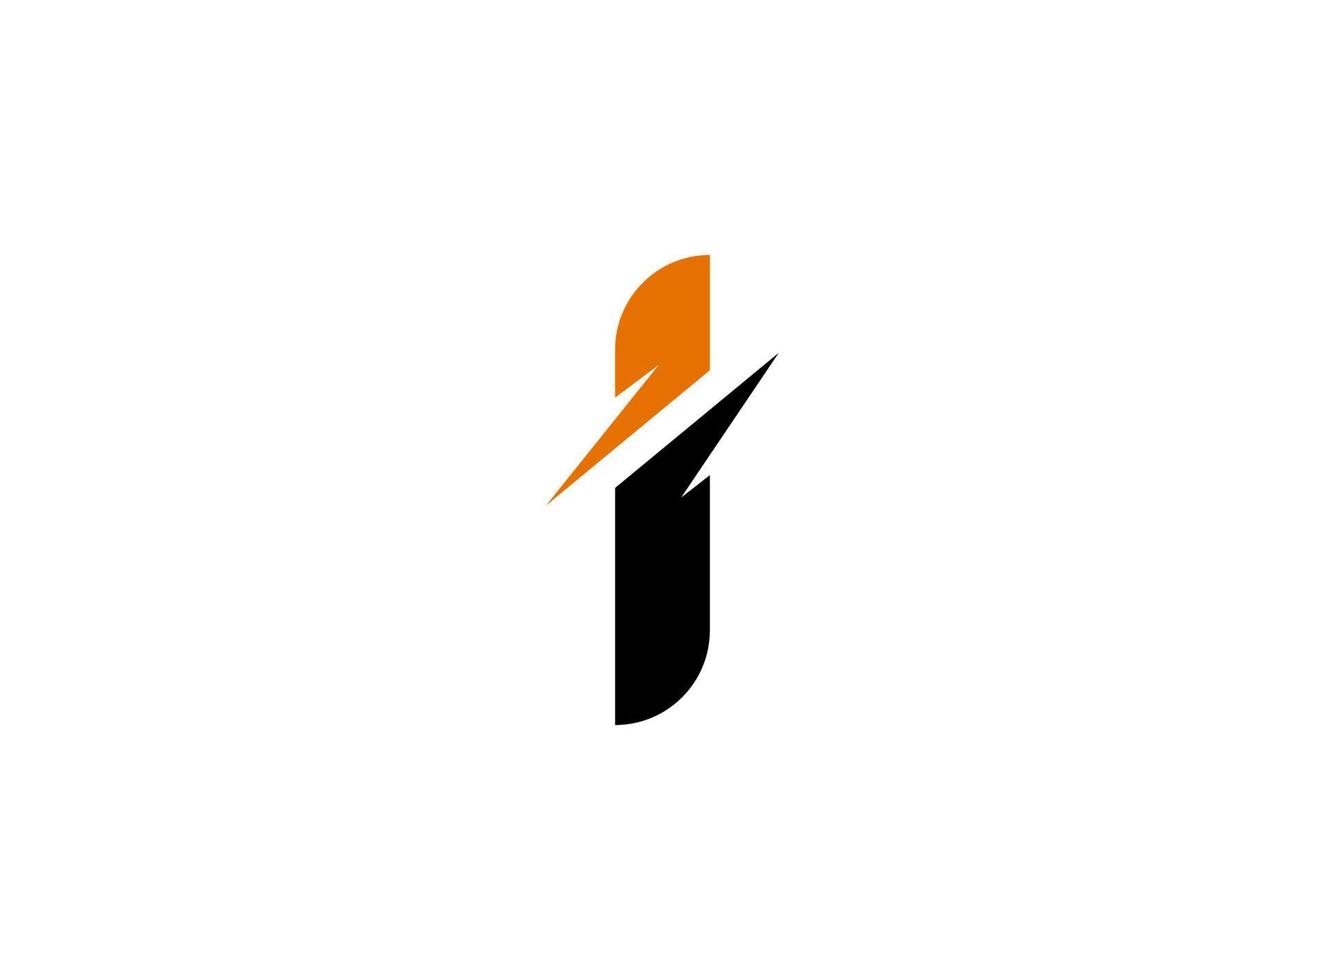 Simple letter i logo design template on white background. Suitable for logo brand vector